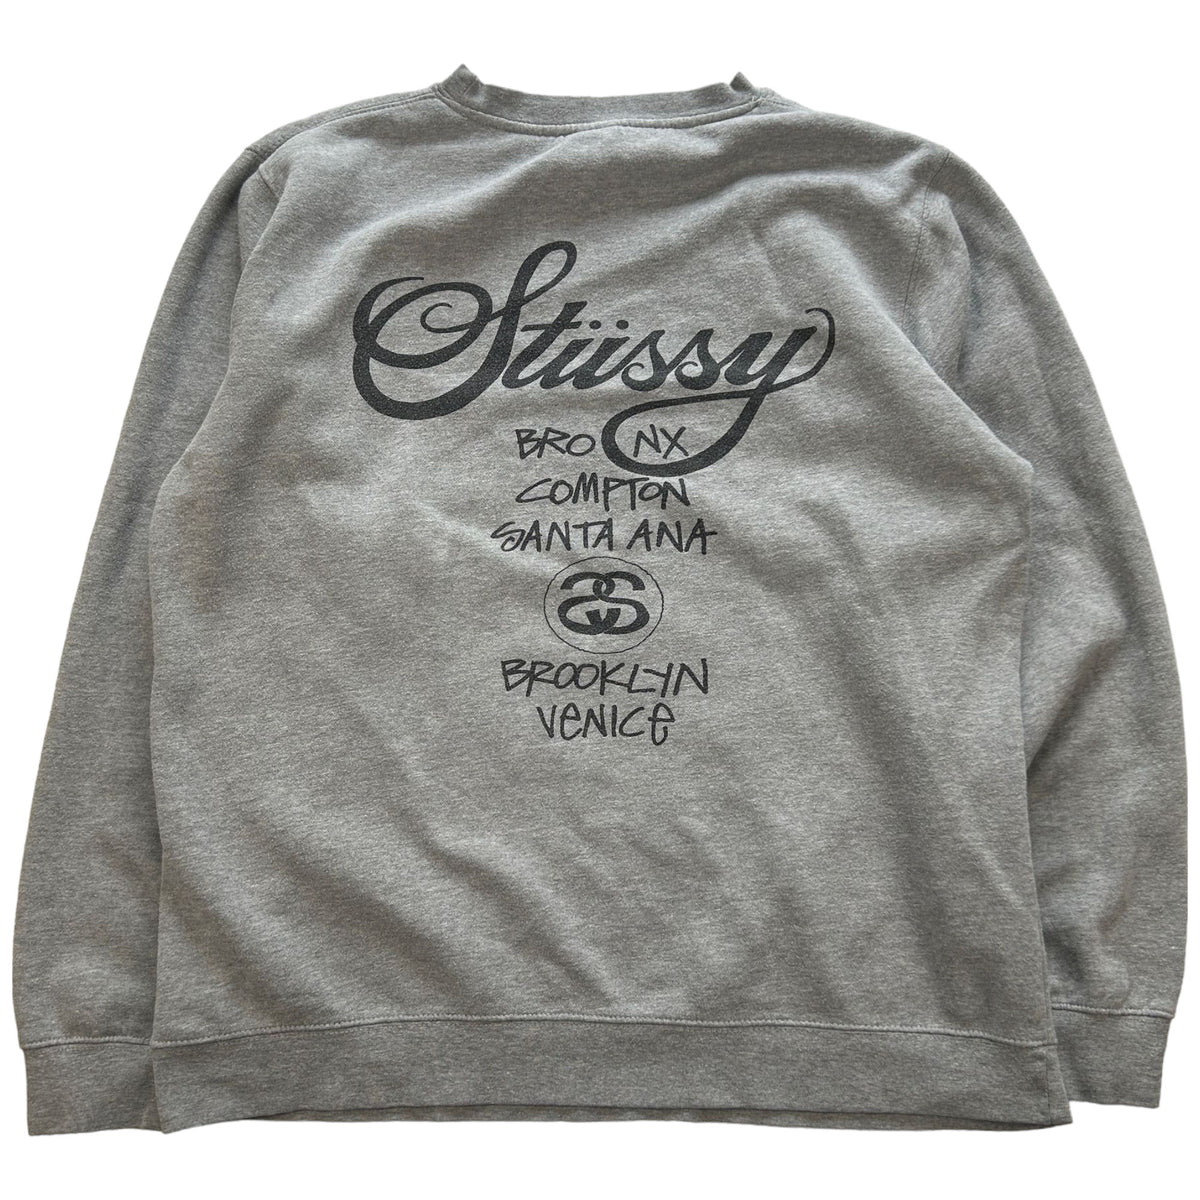 Stussy Graphic Sweatshirt Size XL